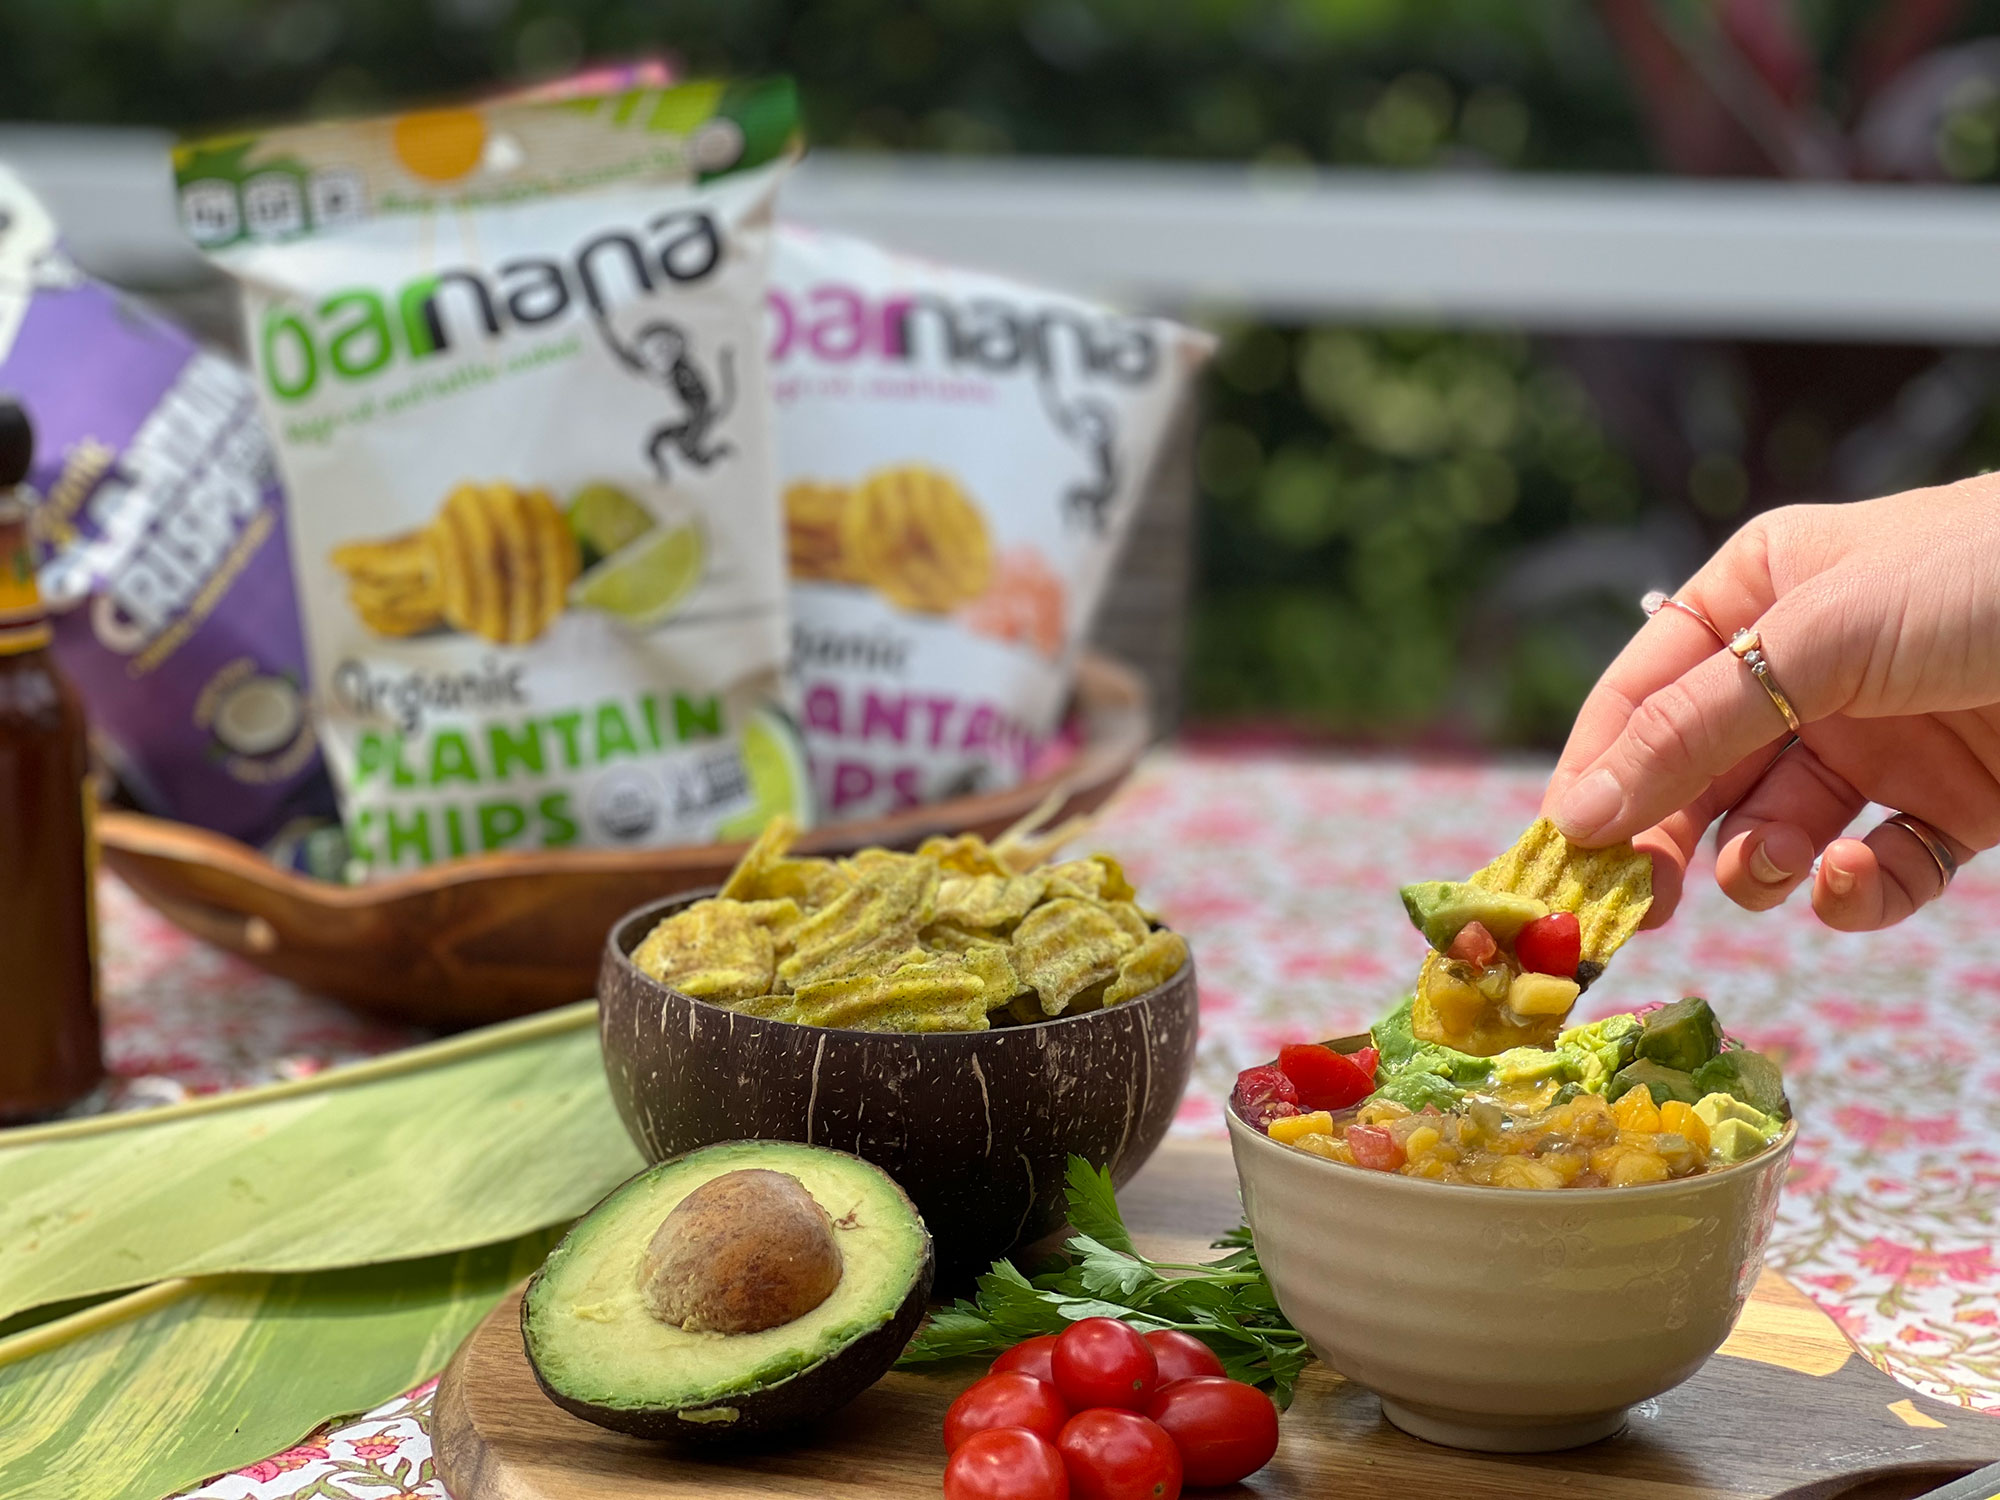 Barnana plantain chips with mango salsa and avocado